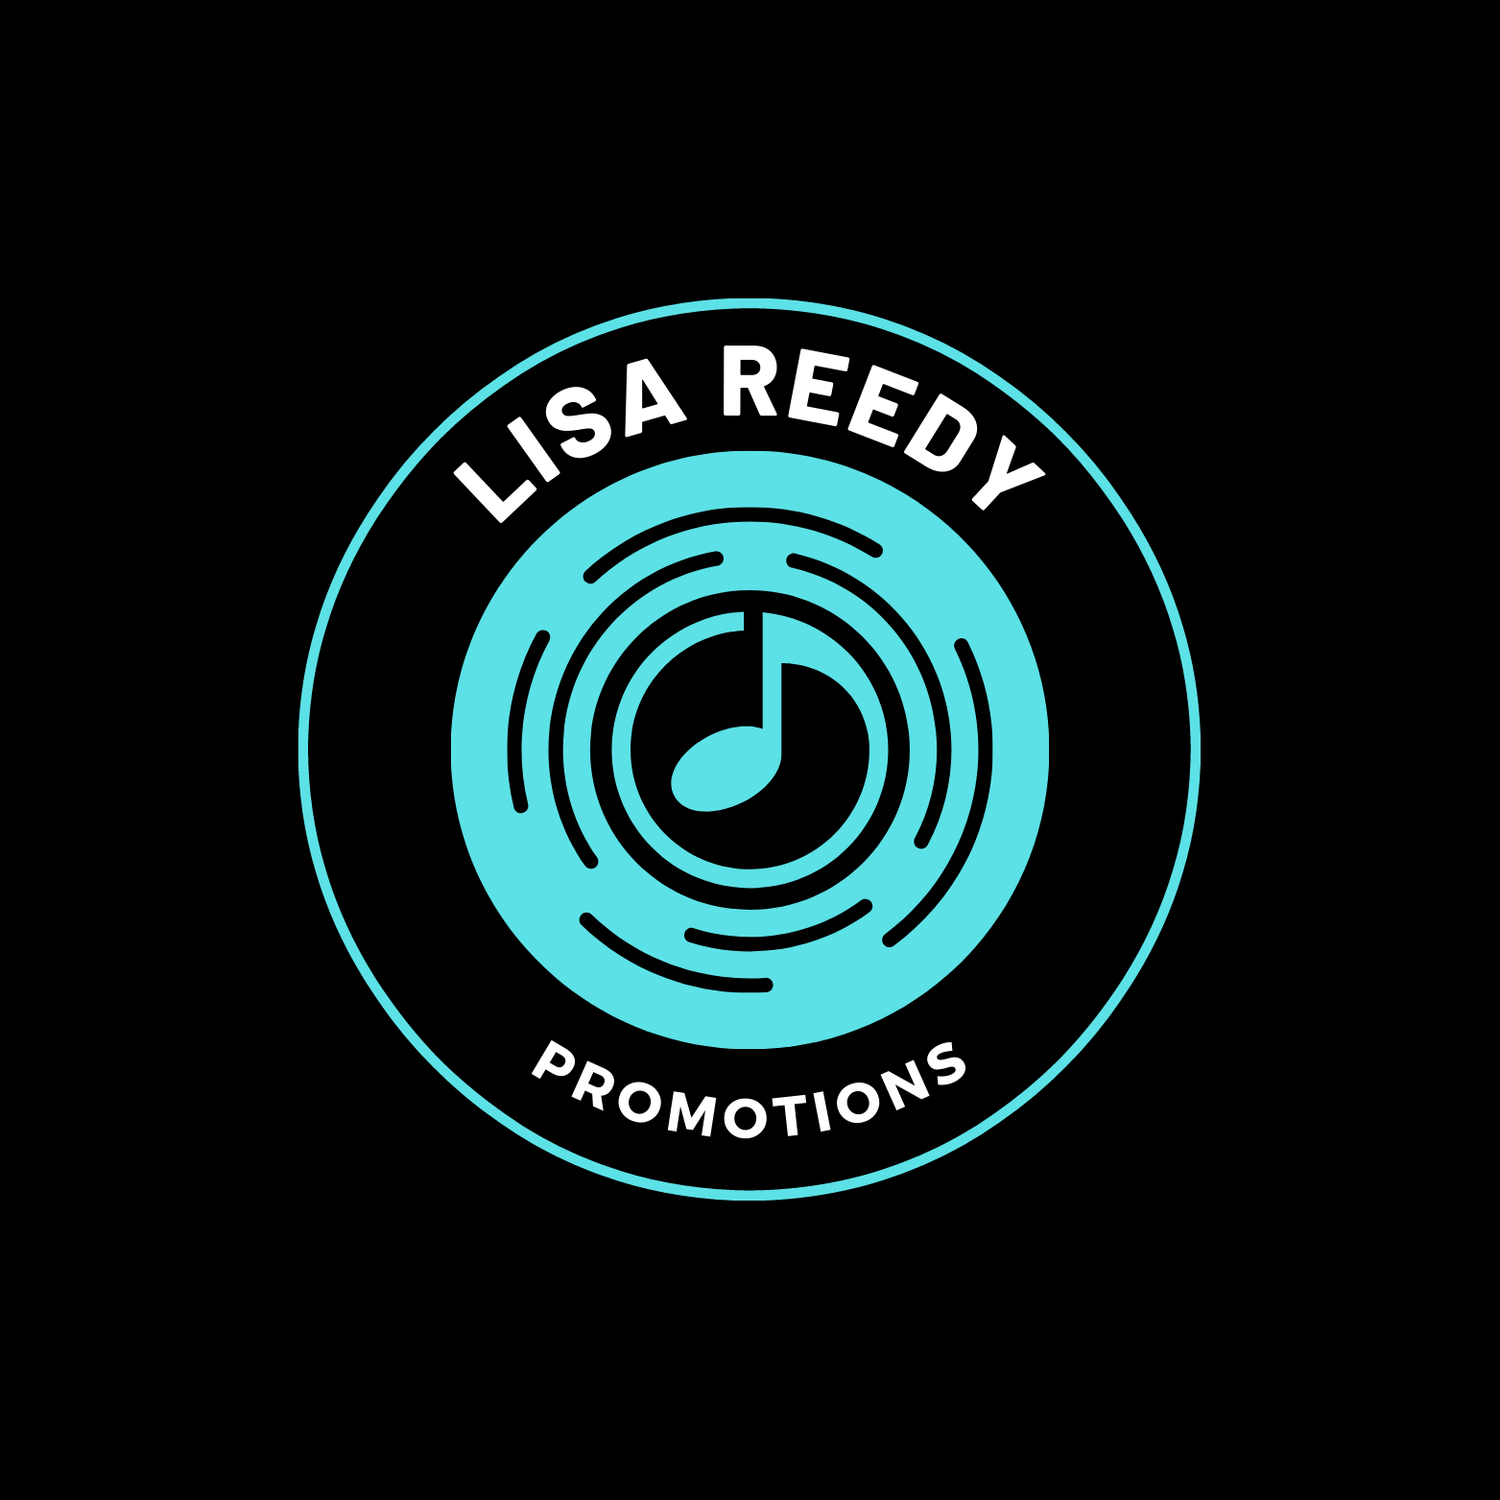 Lisa Reedy Promotions